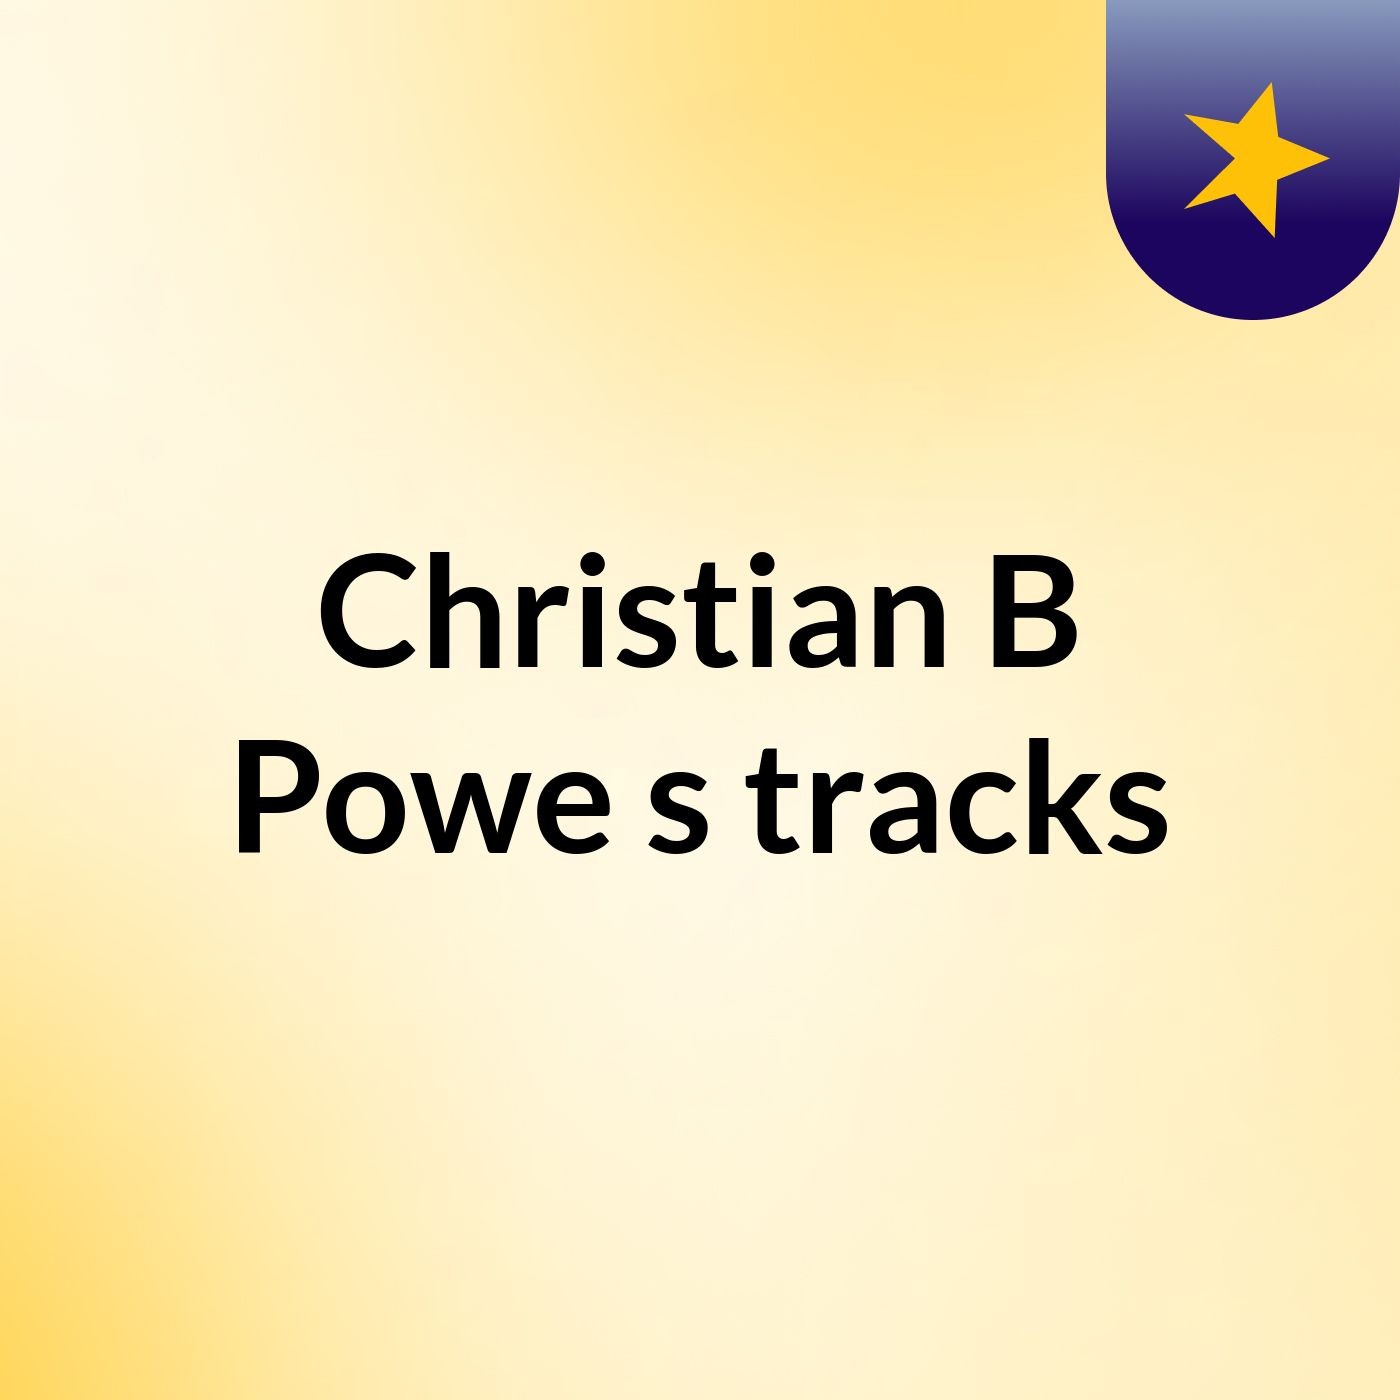 Christian B Powe's tracks